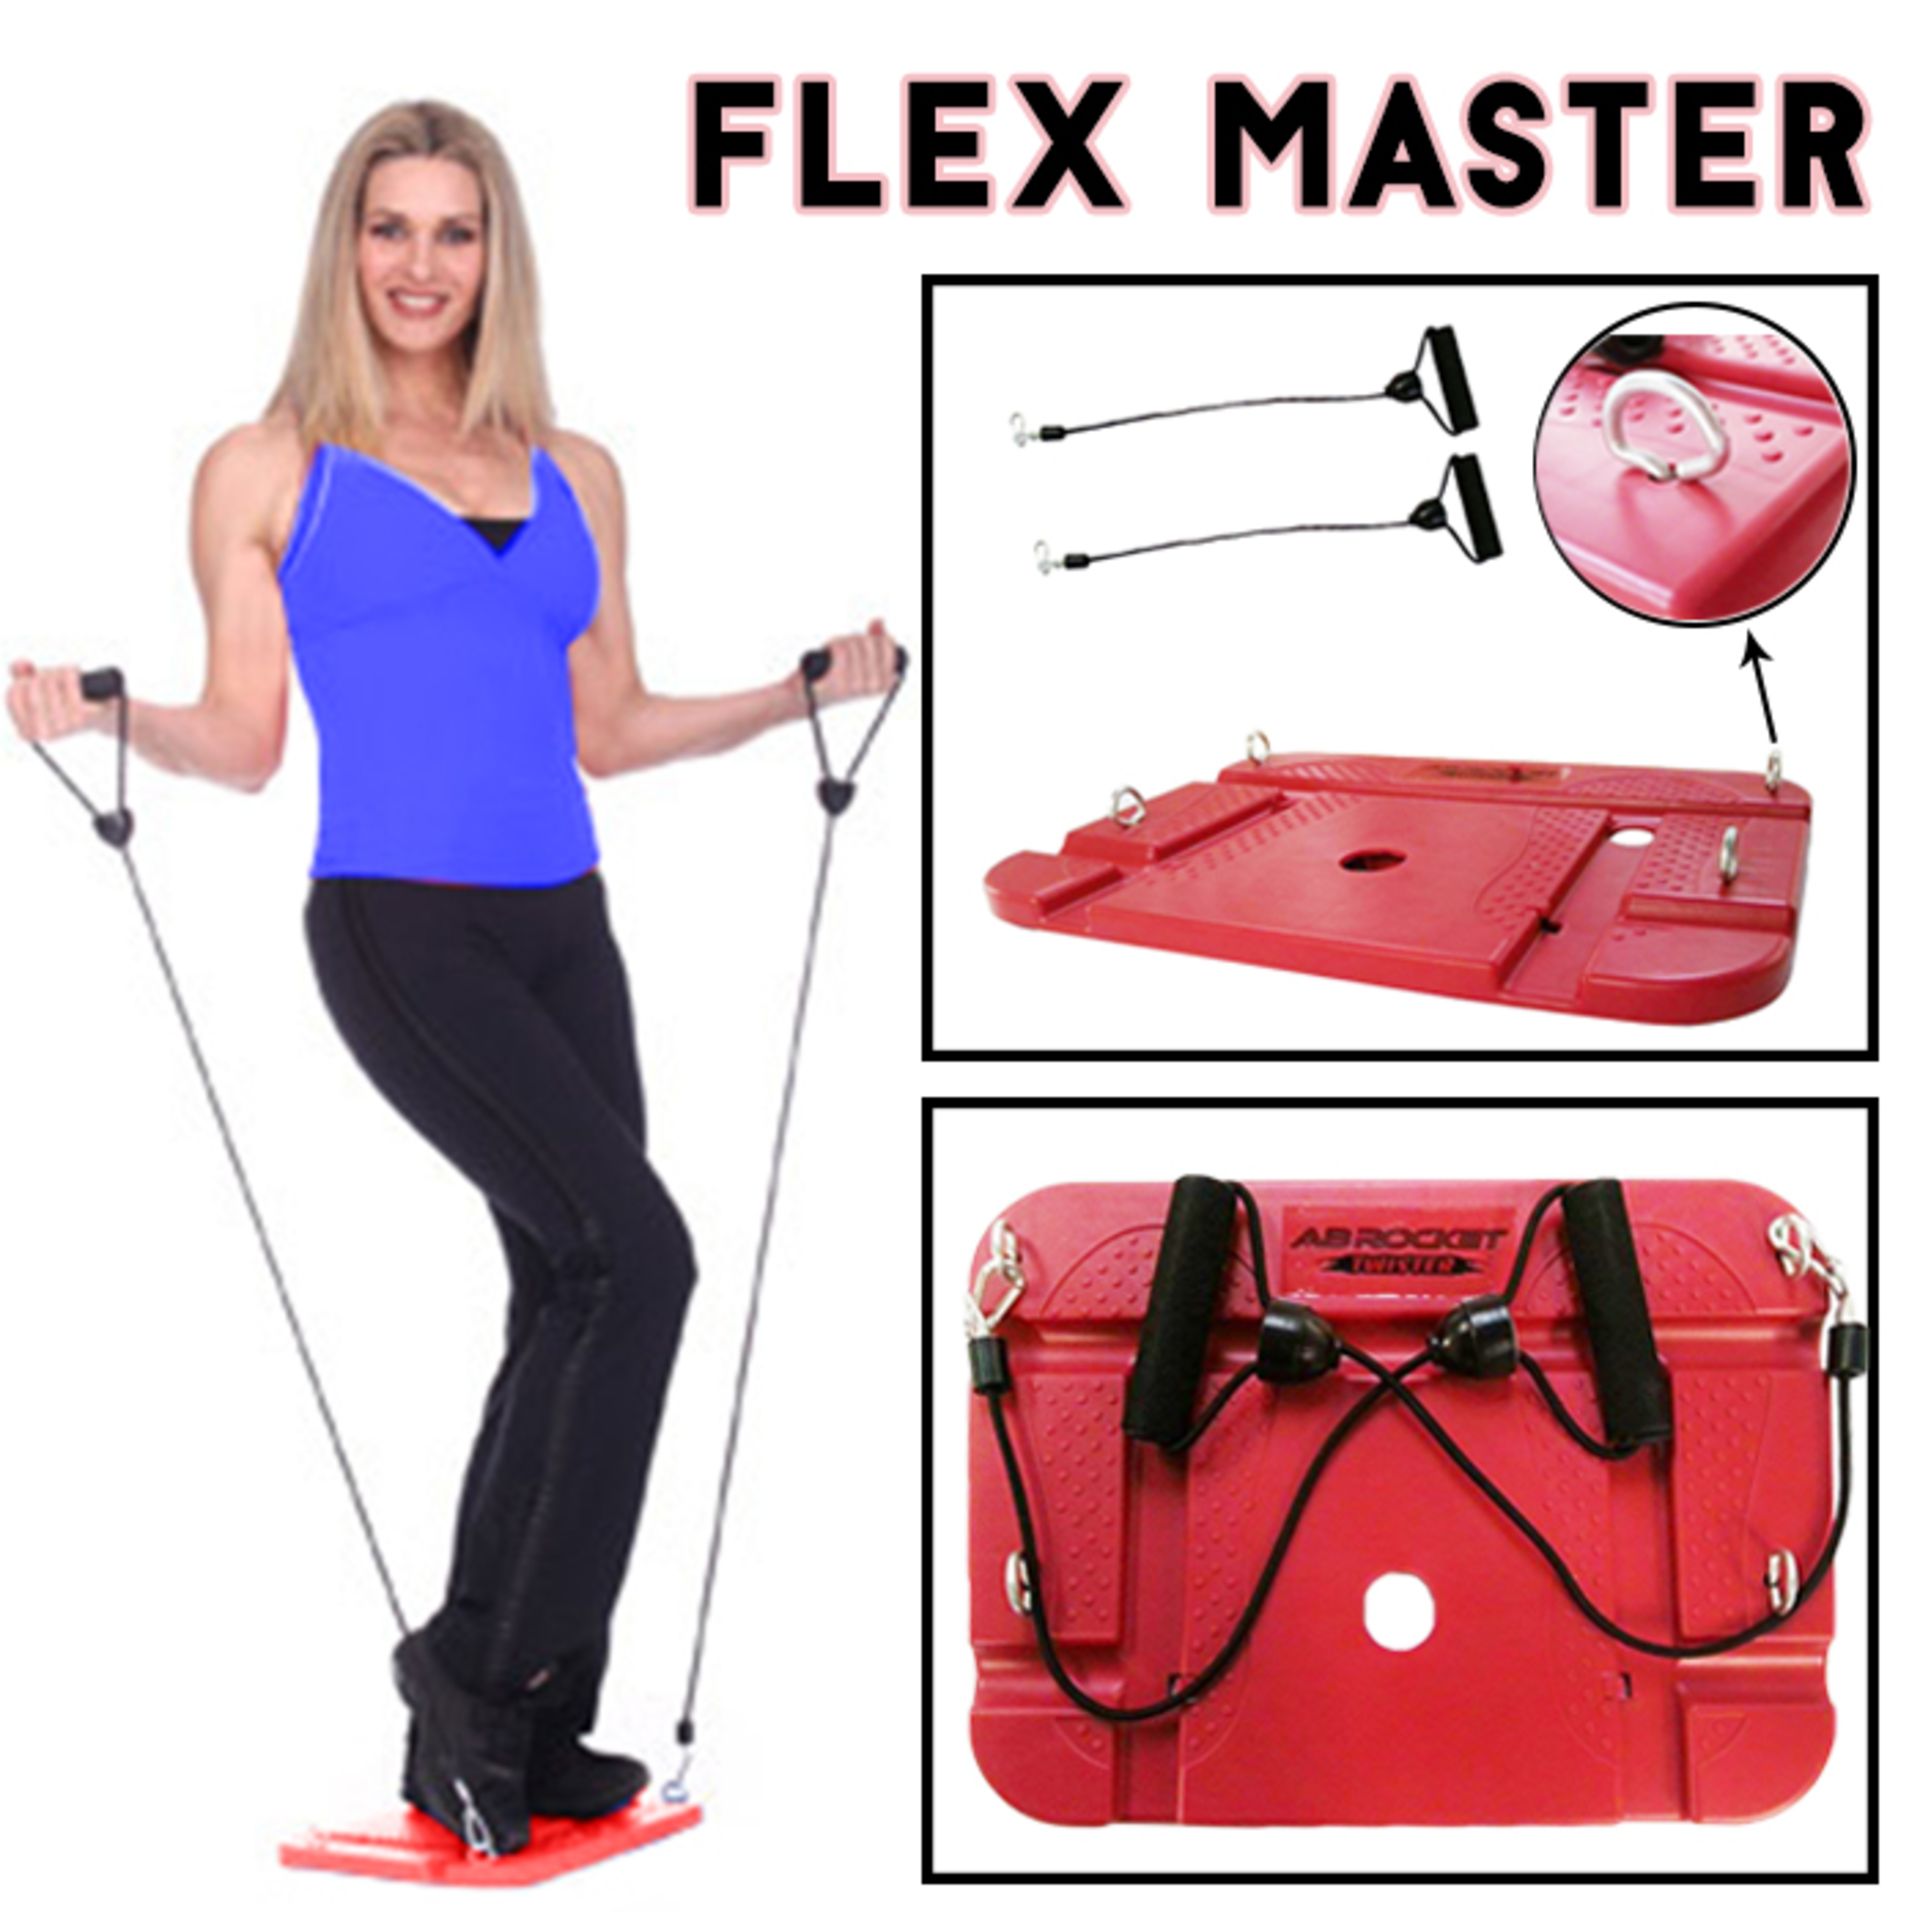 Brand New Flex Master Exercising Machine ISP £12.79 (Ebay)